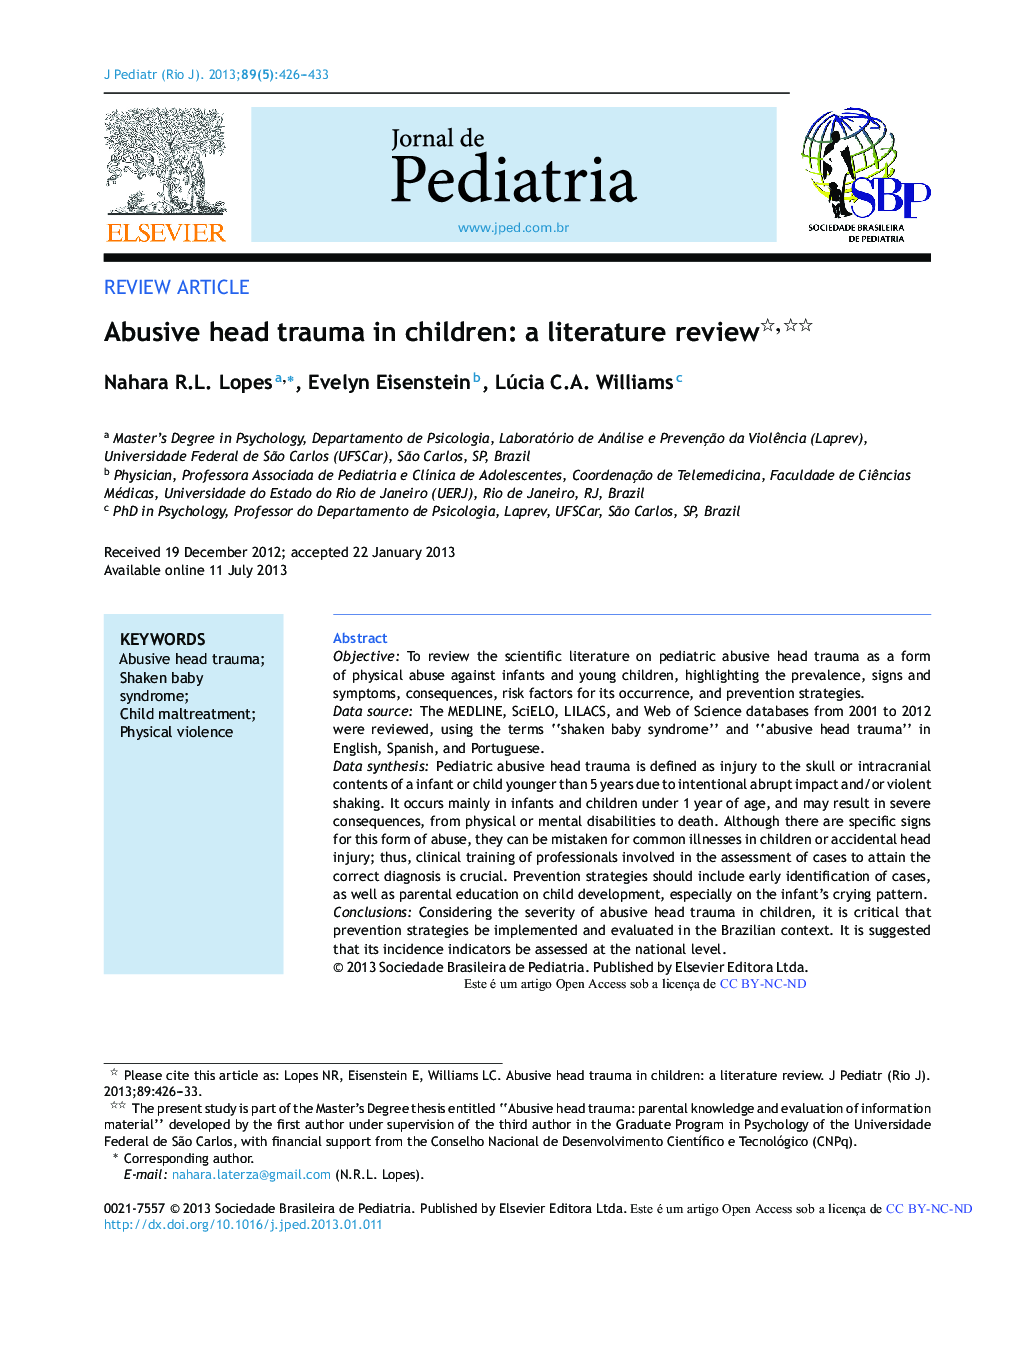 Abusive head trauma in children: a literature review 